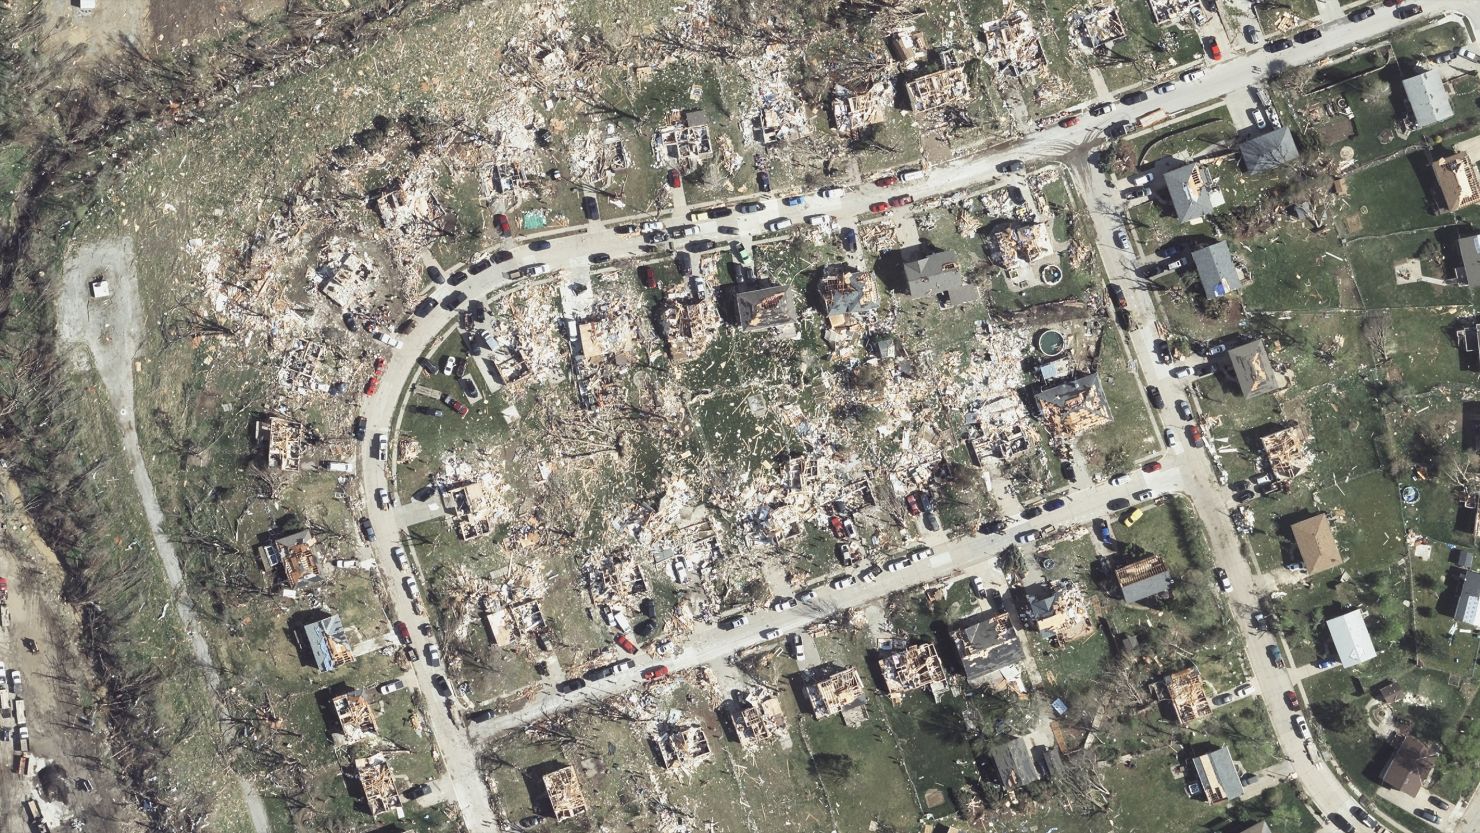 Tornado damage in a neighborhood in Elkhorn, Nebraska, an Omaha suburb.